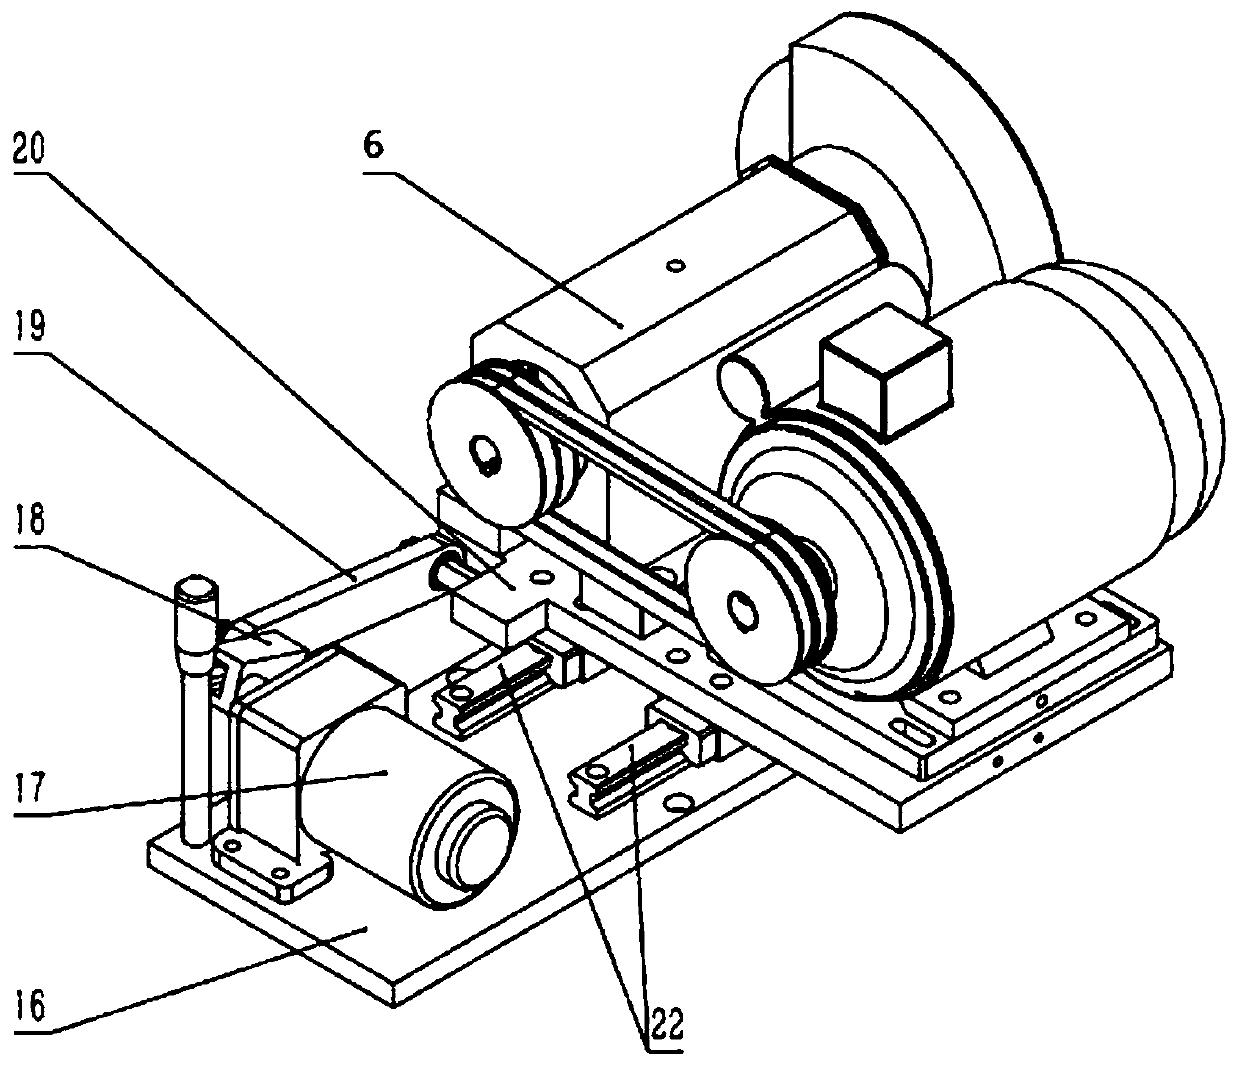 Grinding wheel dressing machine tool and method for dressing grinding wheel